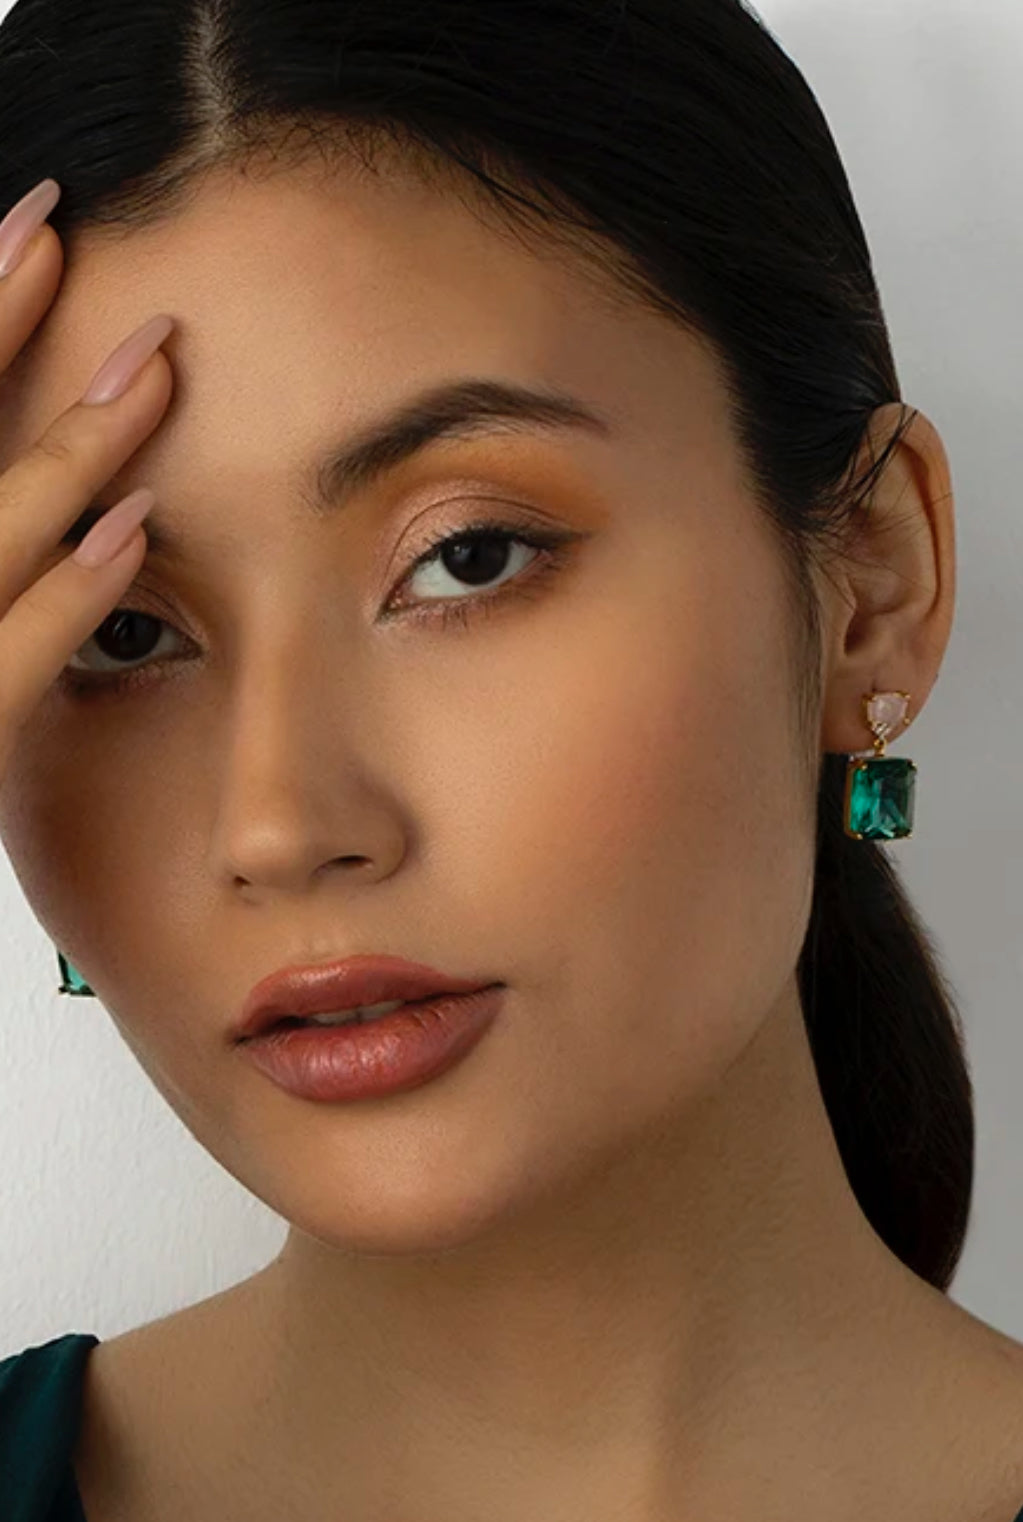 Emerald stone earring, wedding jewelry 